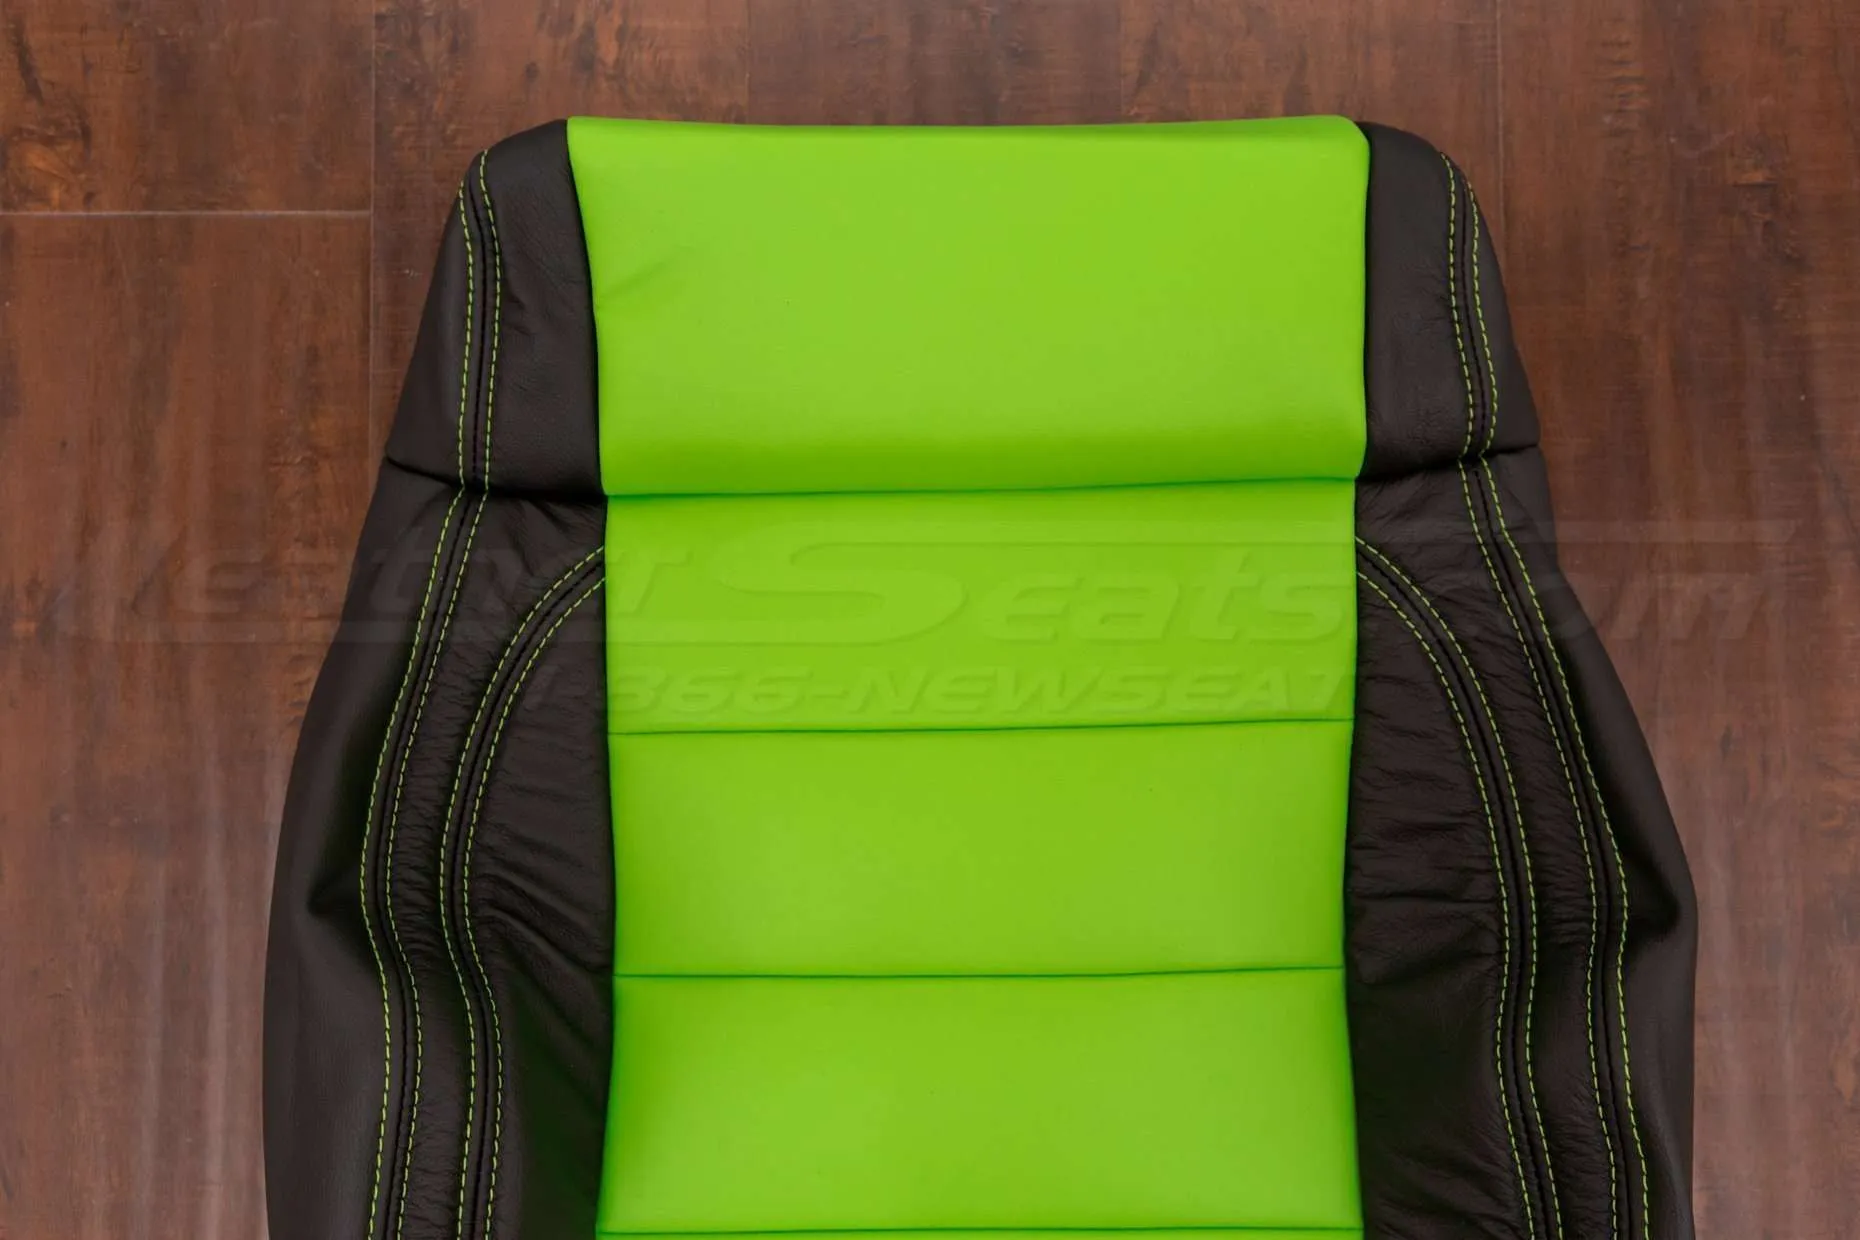 Jeep Wrangler Upholstery Kit - Black & Lime Green - Front backrest close-up